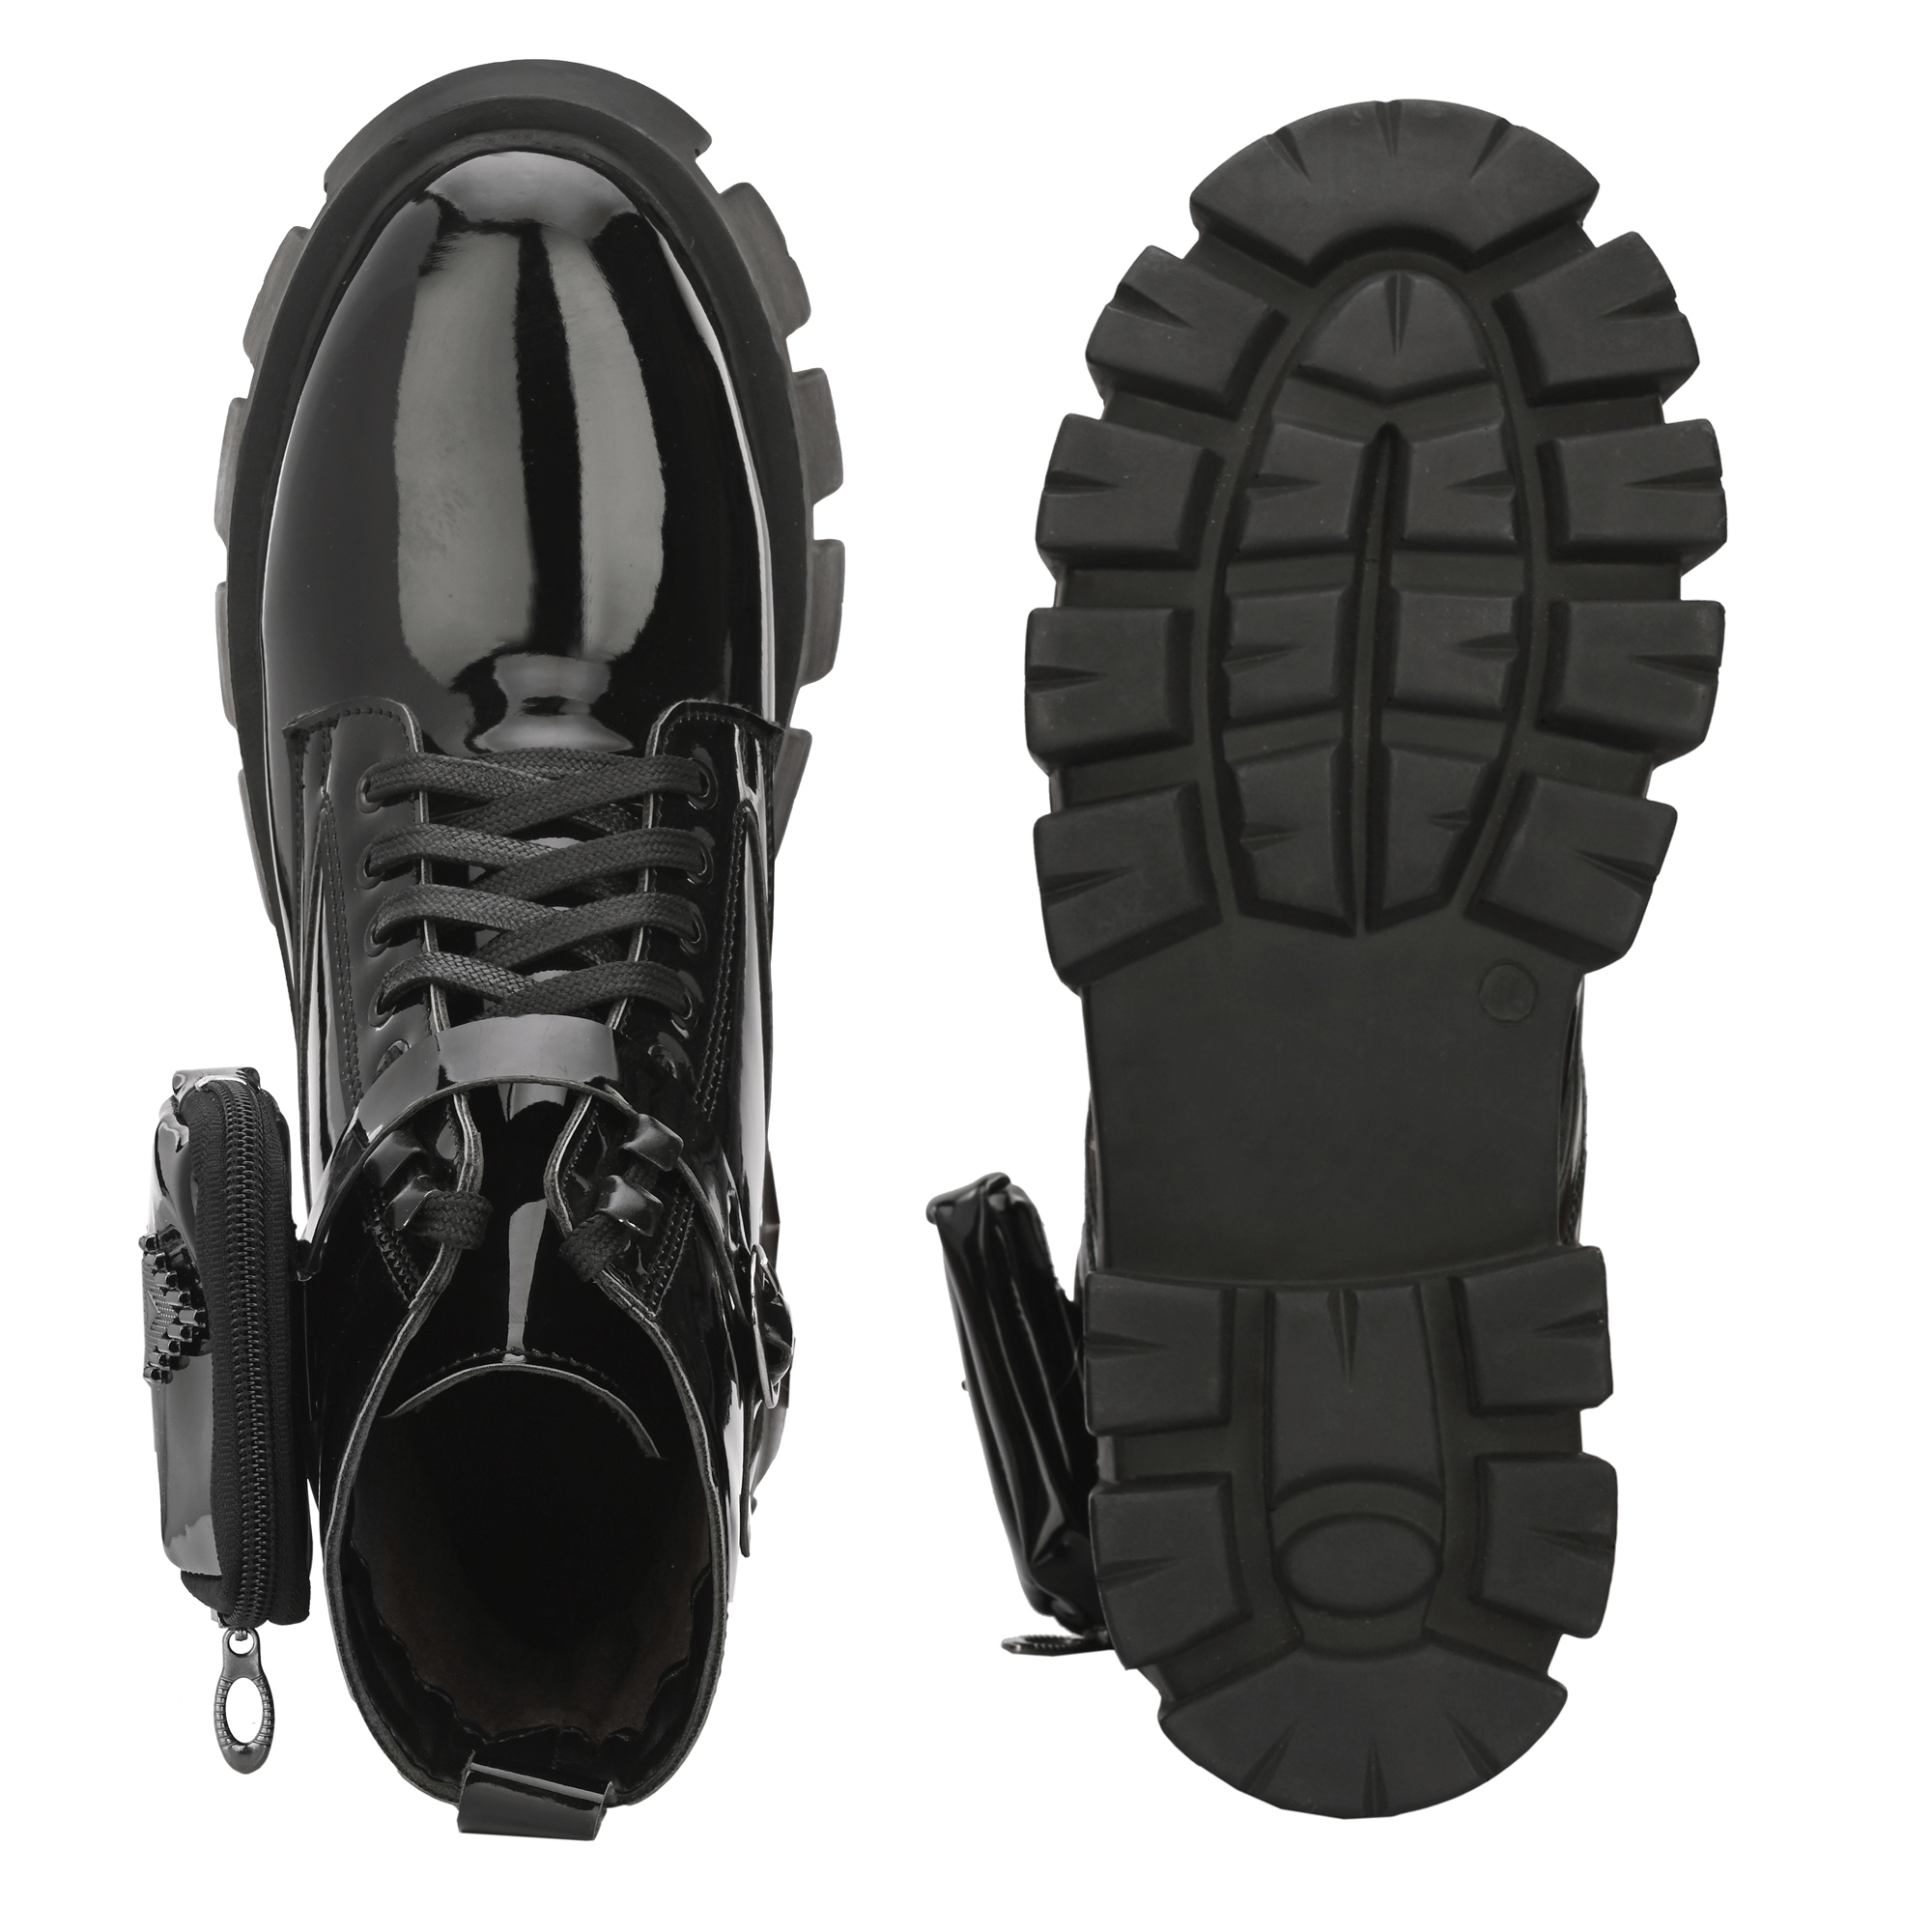 Attitudist Glossy Black Stylish Side Pocket High Heel Ankle Boots For Men MTOSSC